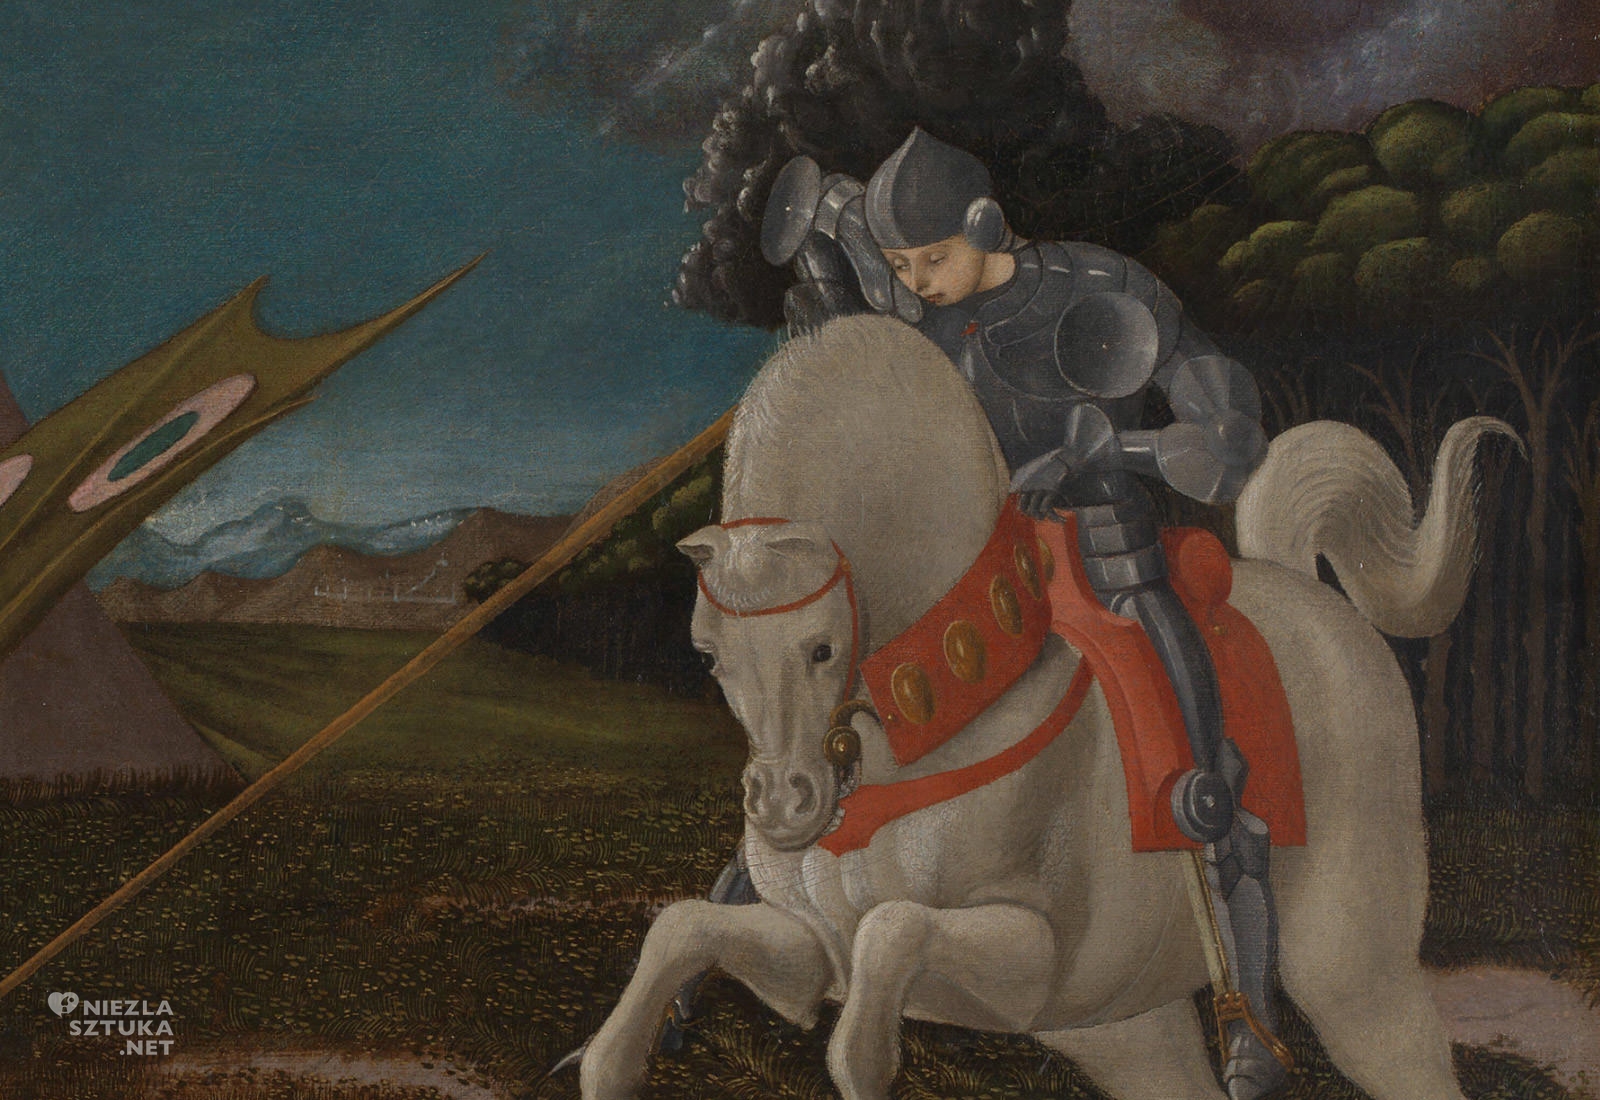 Paolo Ucello, Święty Jerzy i smok, detal, renesans, sztuka włoska, Niezła Sztuka